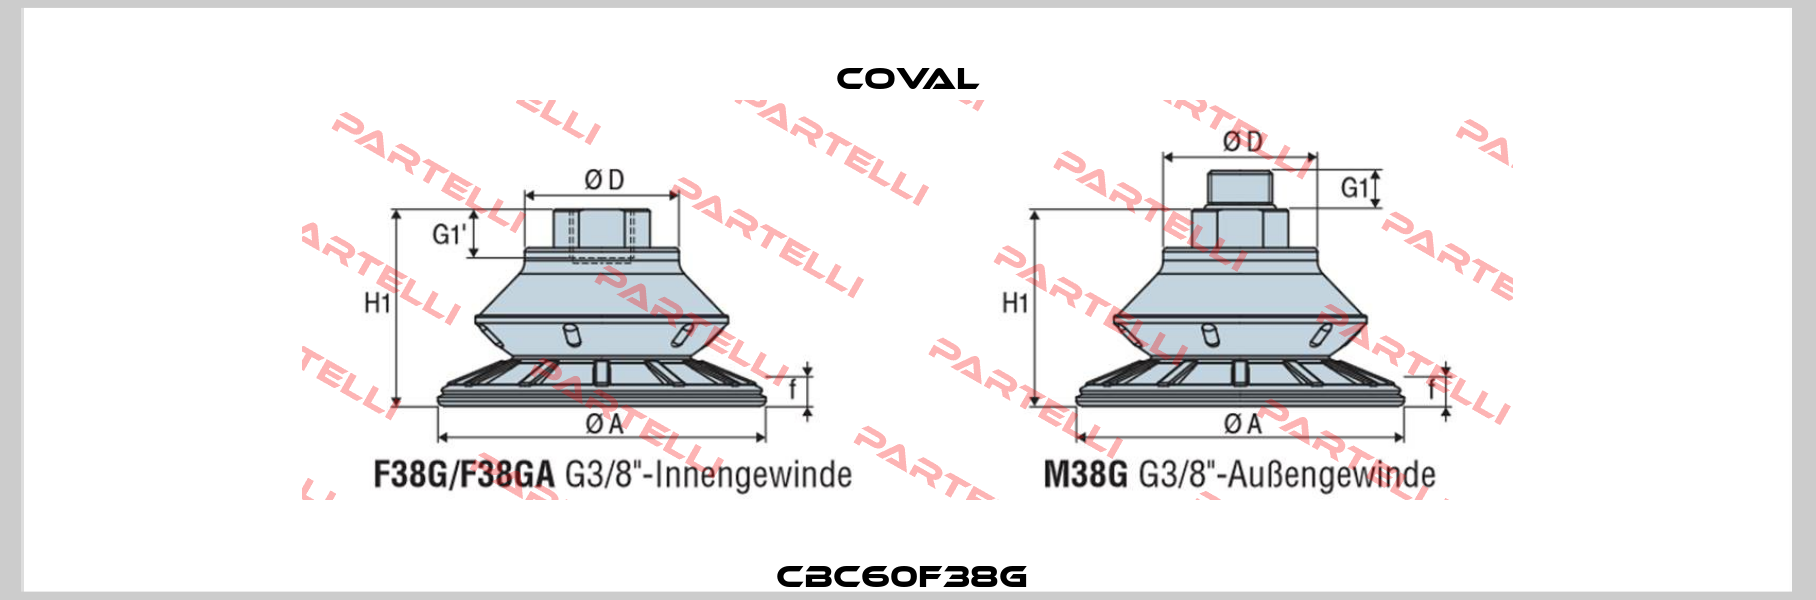 CBC60F38G  Coval